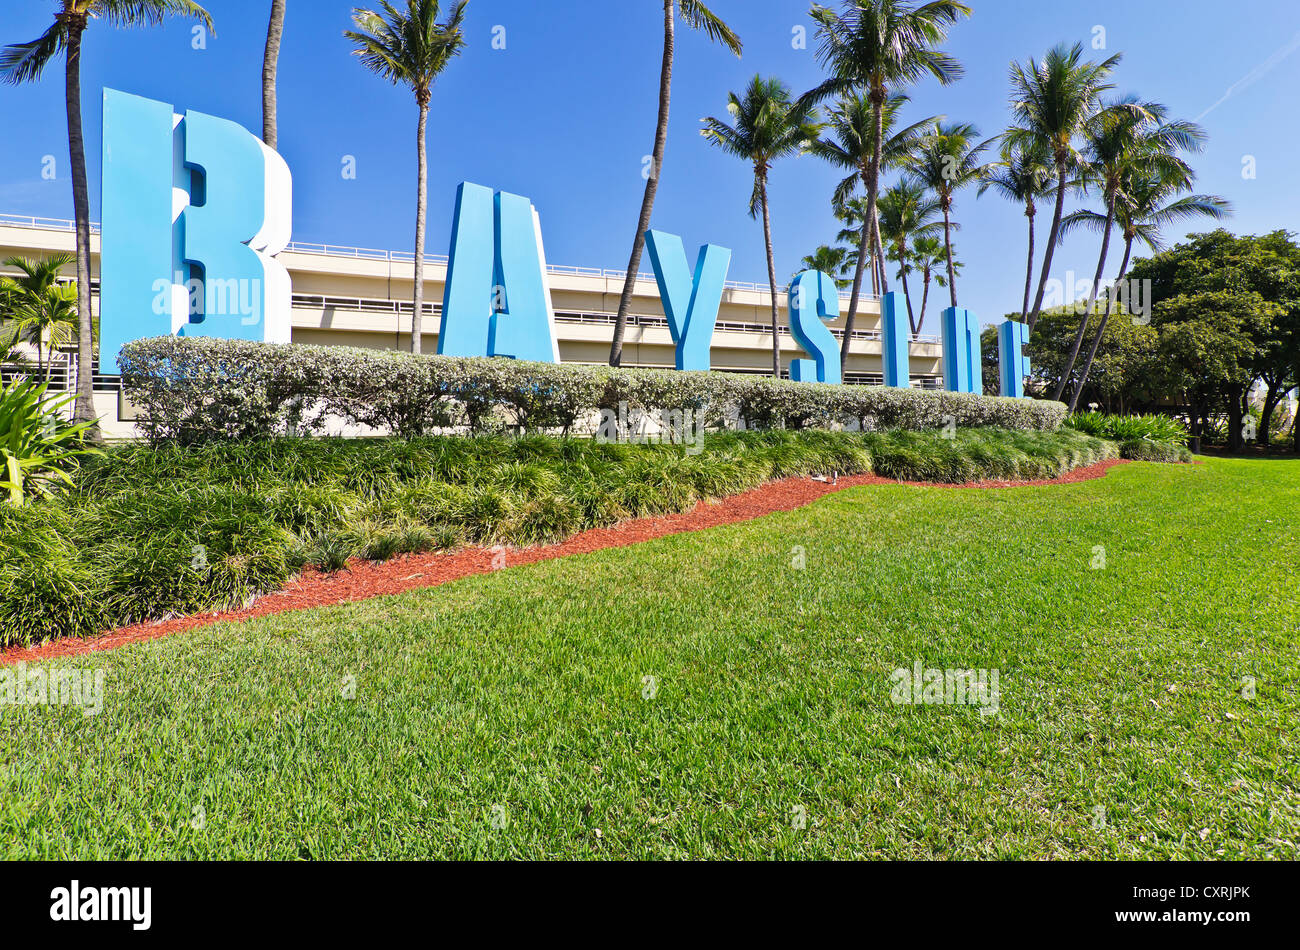 La signalisation sur Bayside Bayside Marketplace, Miami, Floride, USA Banque D'Images